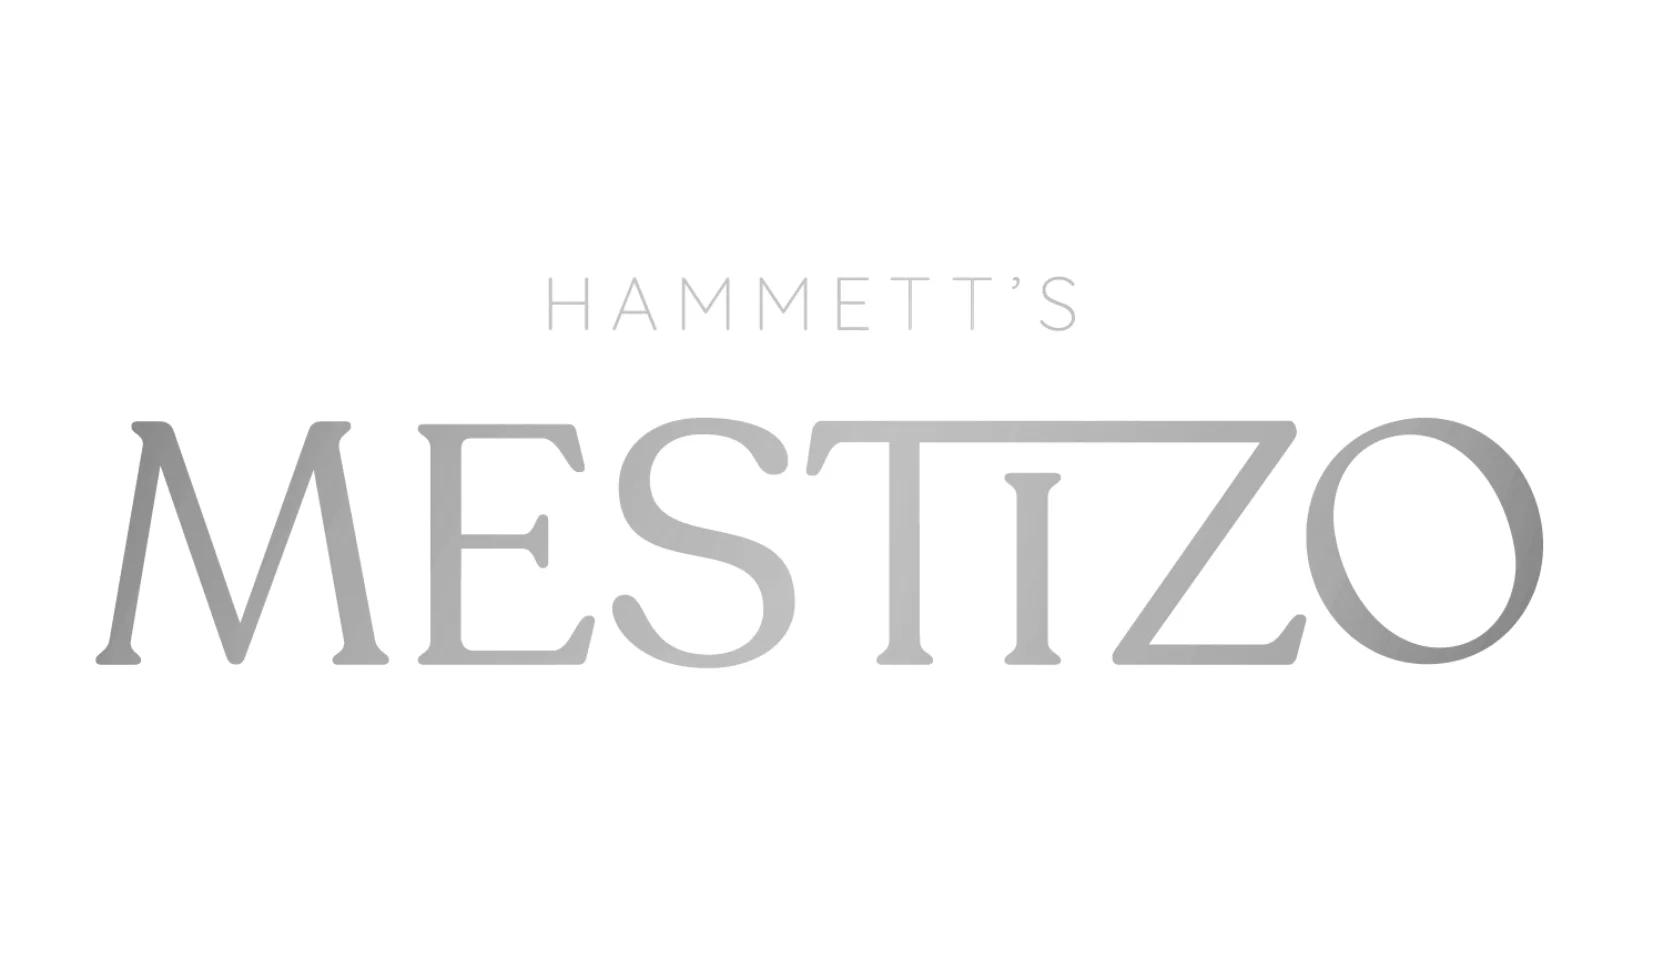 Hammett’s Mestizo Menorca